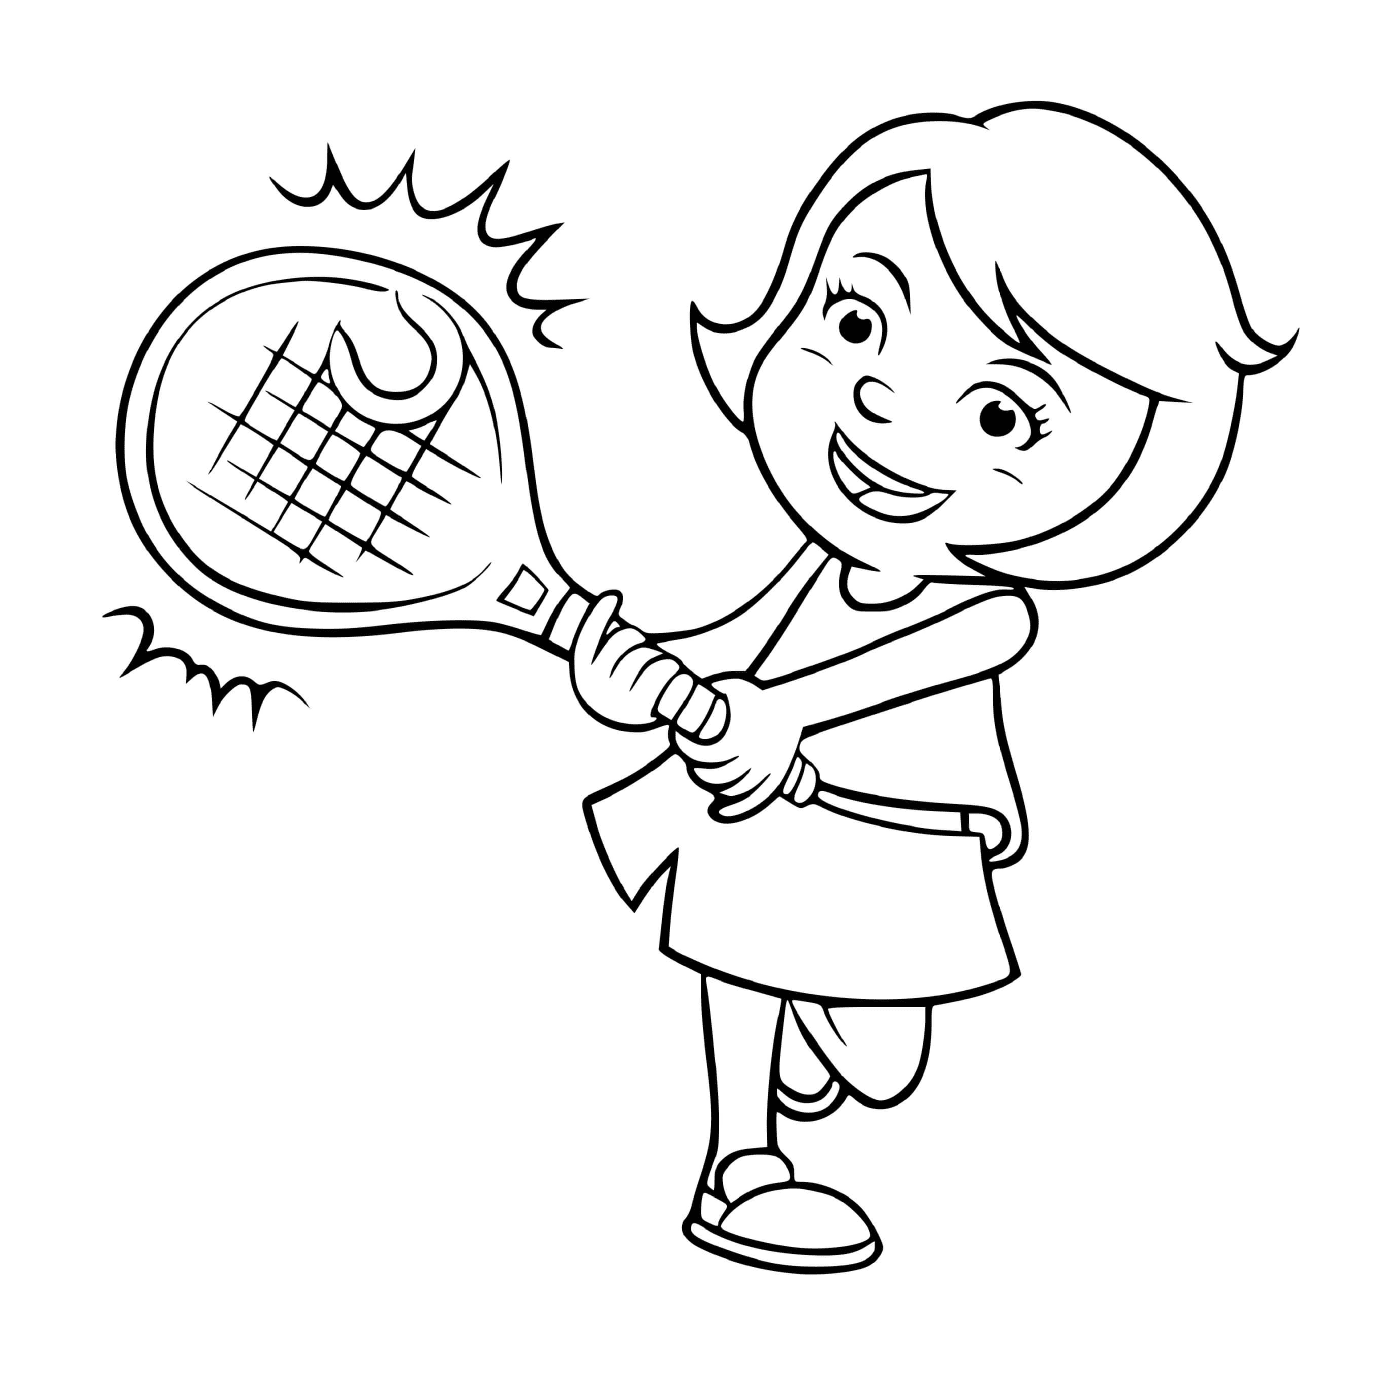  Una chica juega al tenis 